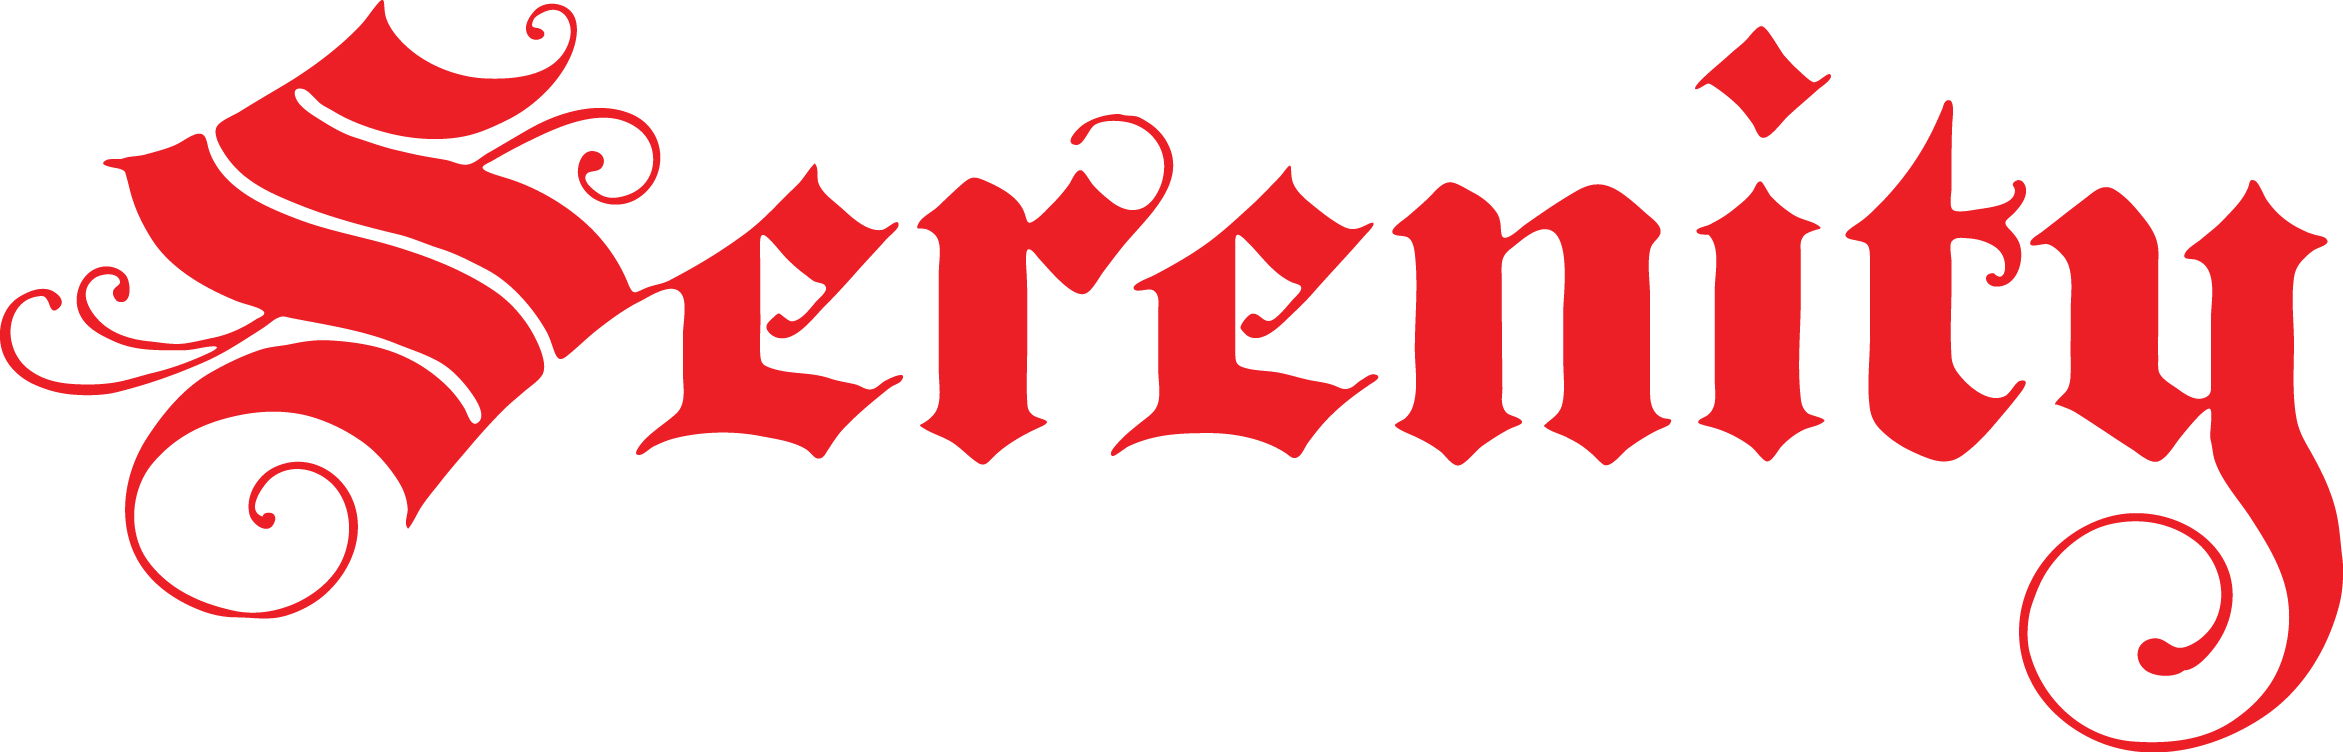 Serenity Hair Studio Llc - Momentum Multiply Logo (2343x752)